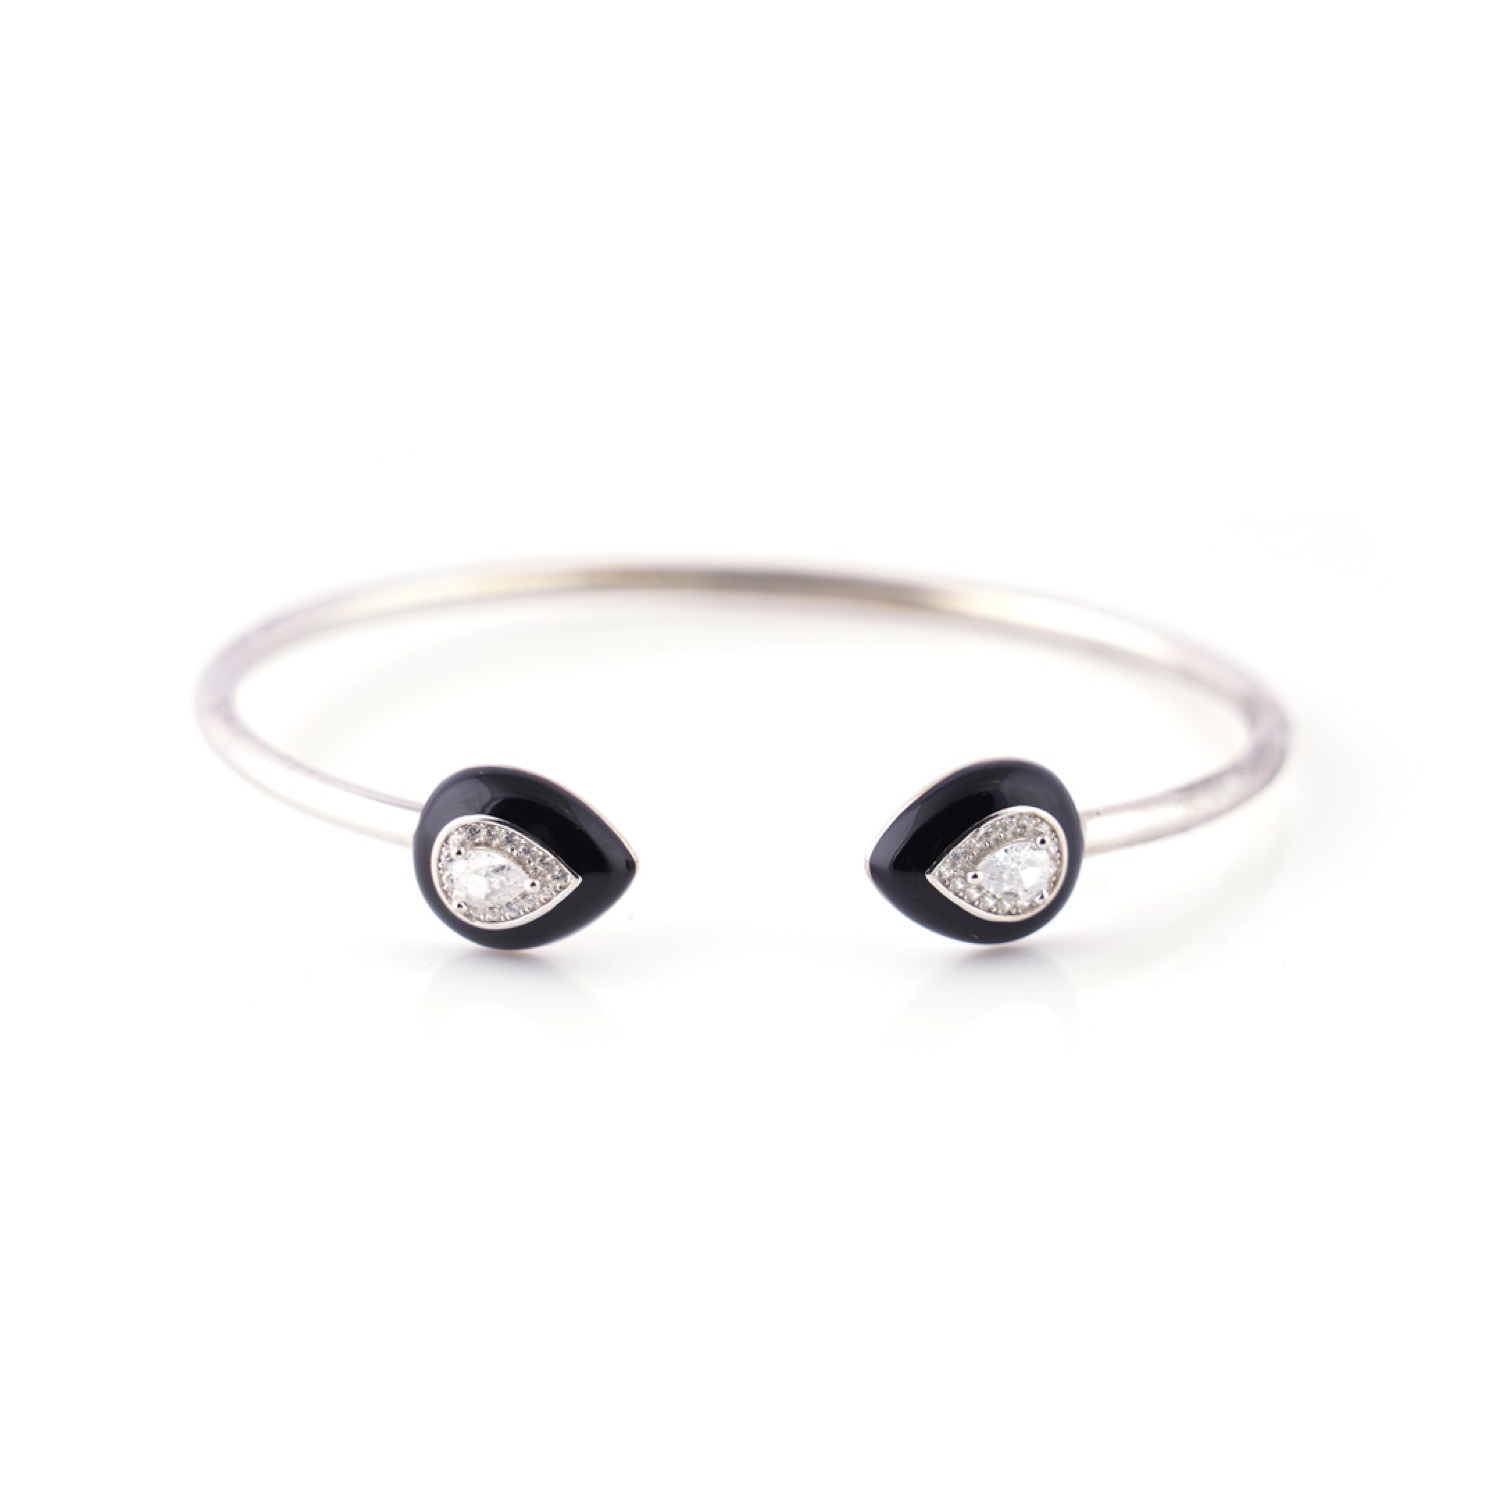 varam_bracelet_and_bangle_pear_shaped_design_black_enameled_open_cuff_silver_bracelet-1